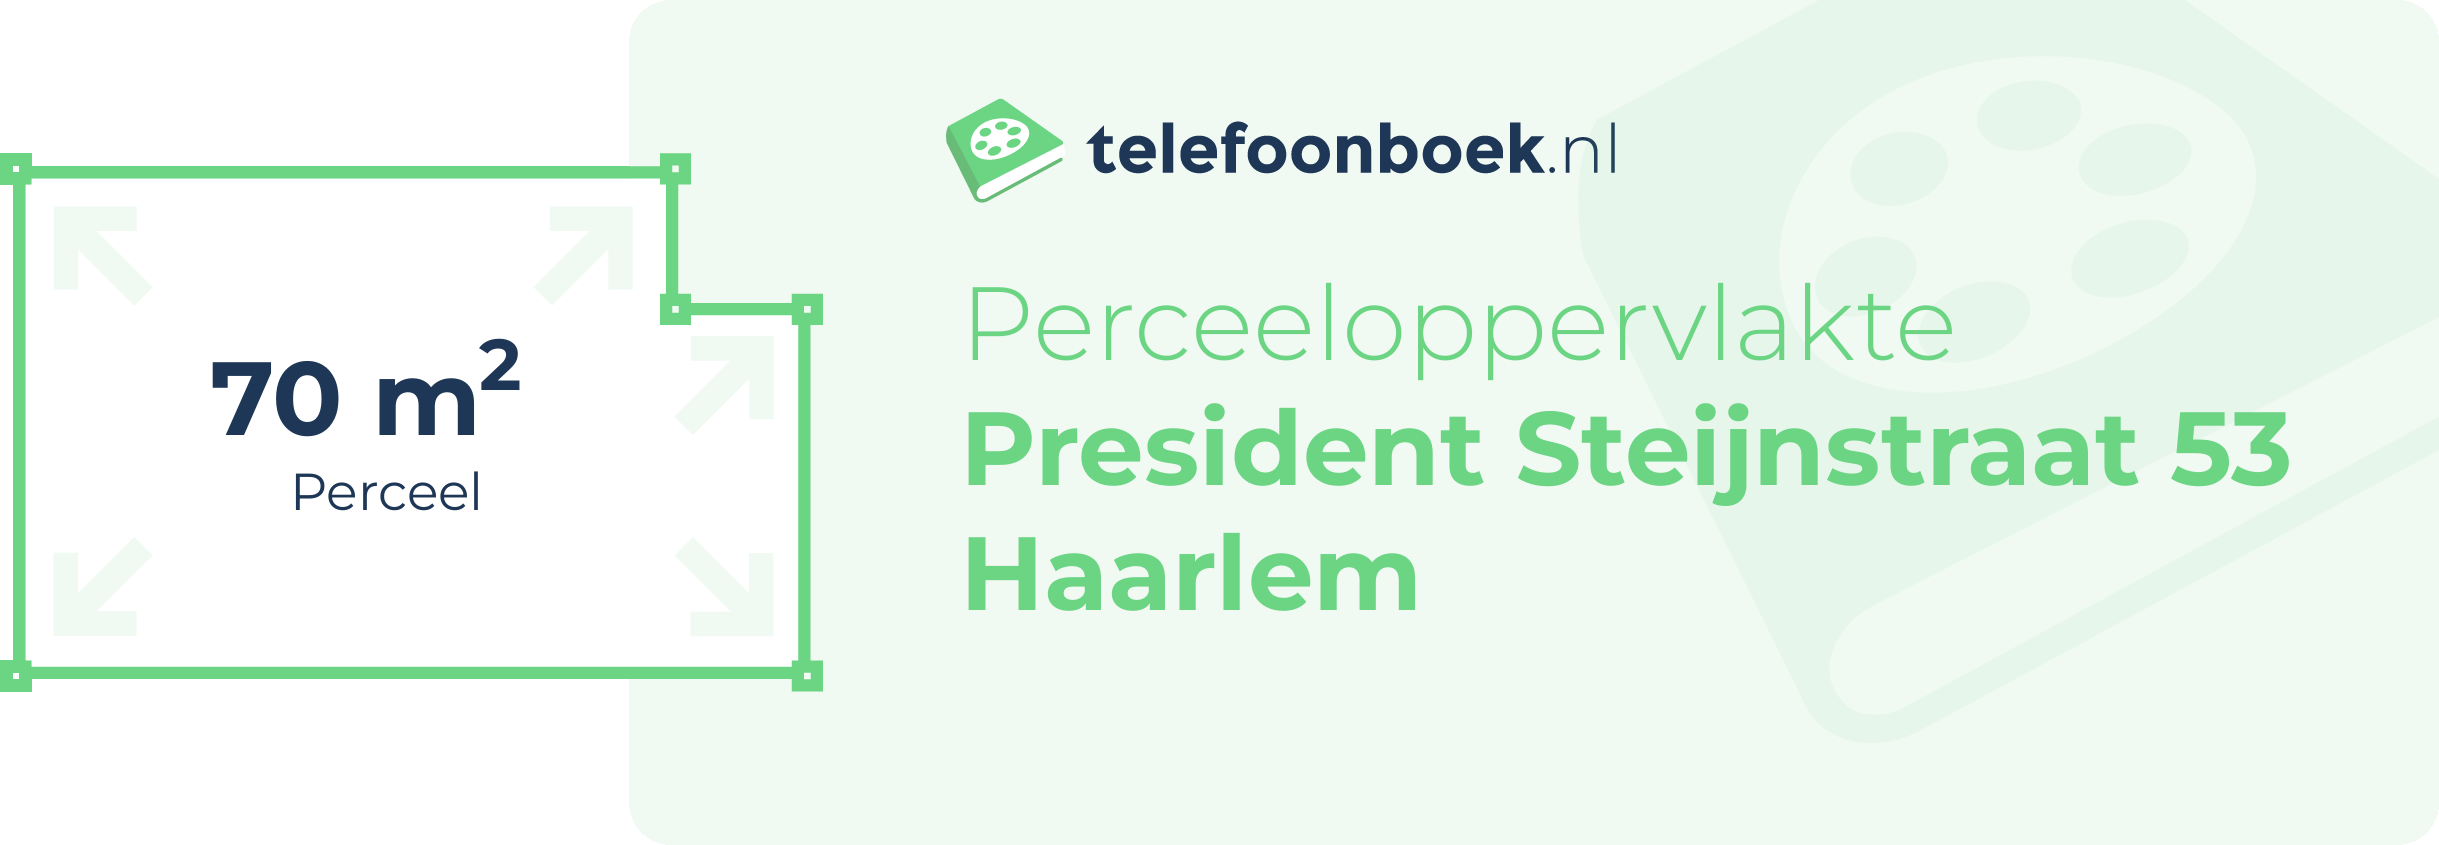 Perceeloppervlakte President Steijnstraat 53 Haarlem